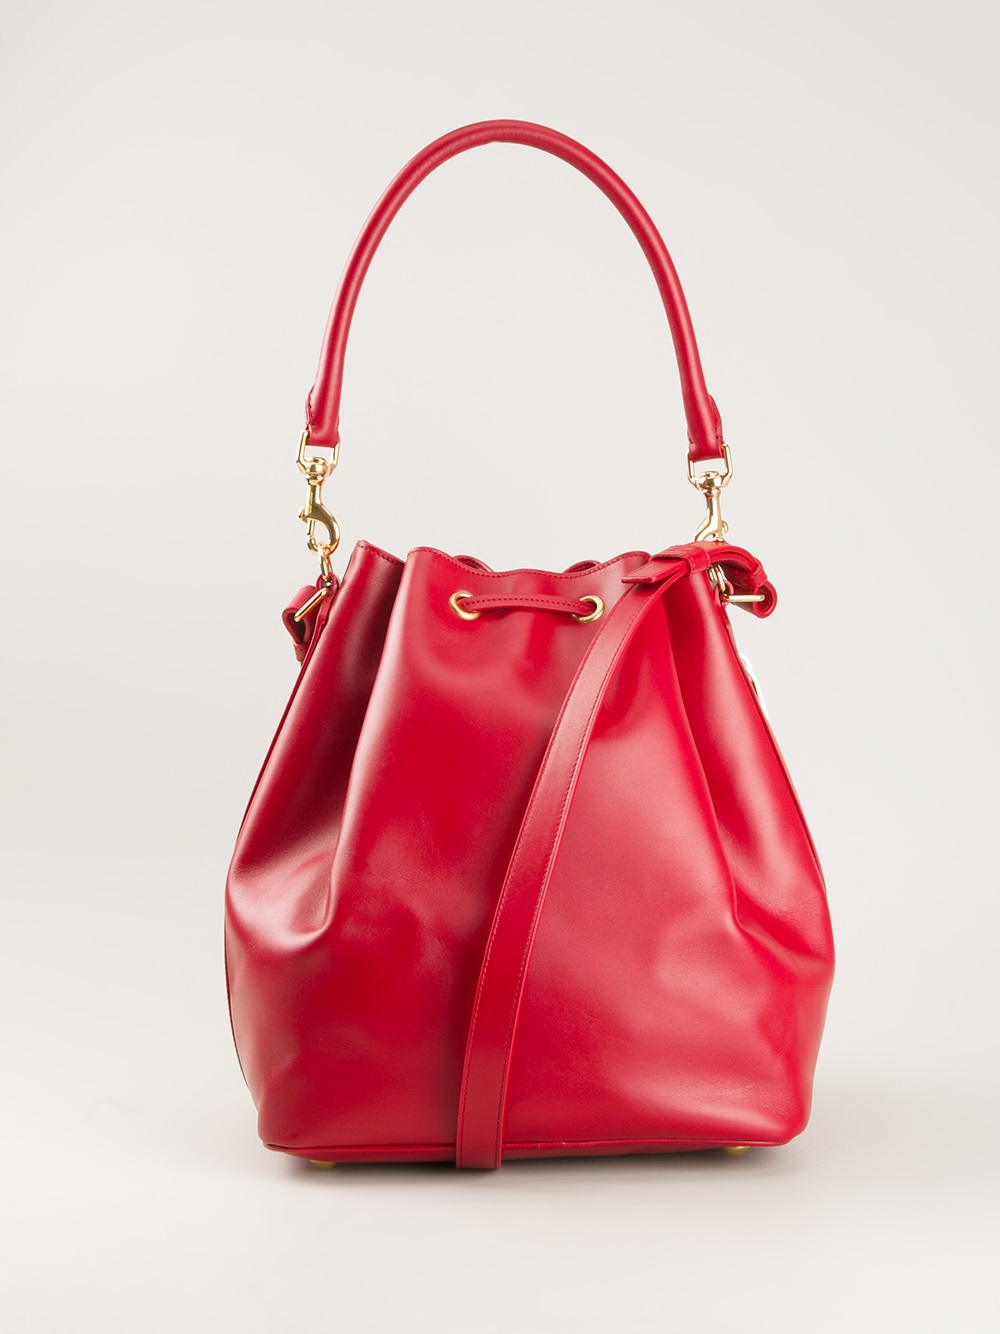 Lyst - Saint Laurent 'Emmanuelle' Bucket Bag in Red